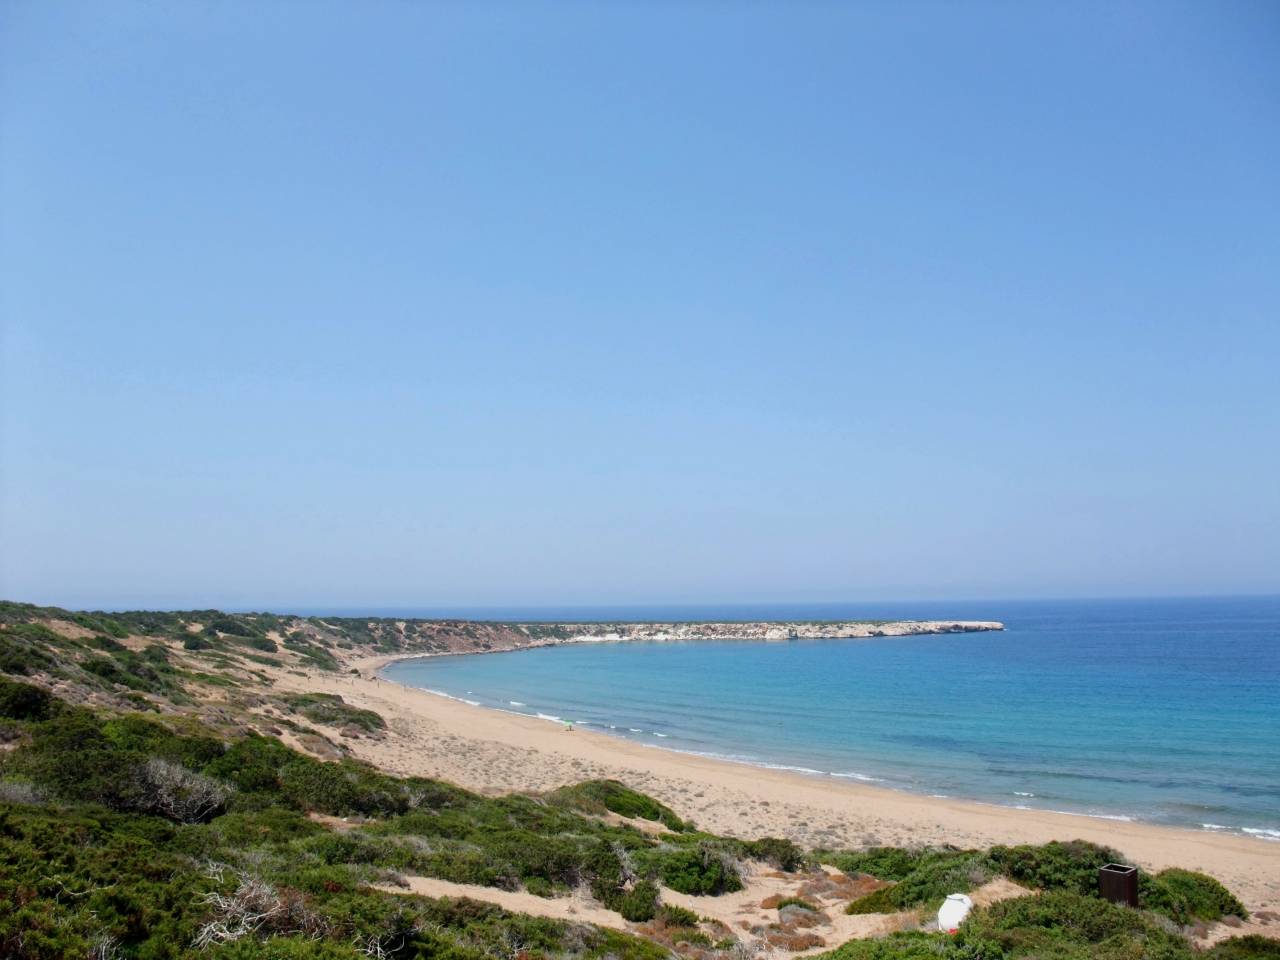 Cyprus Island: Cyprus